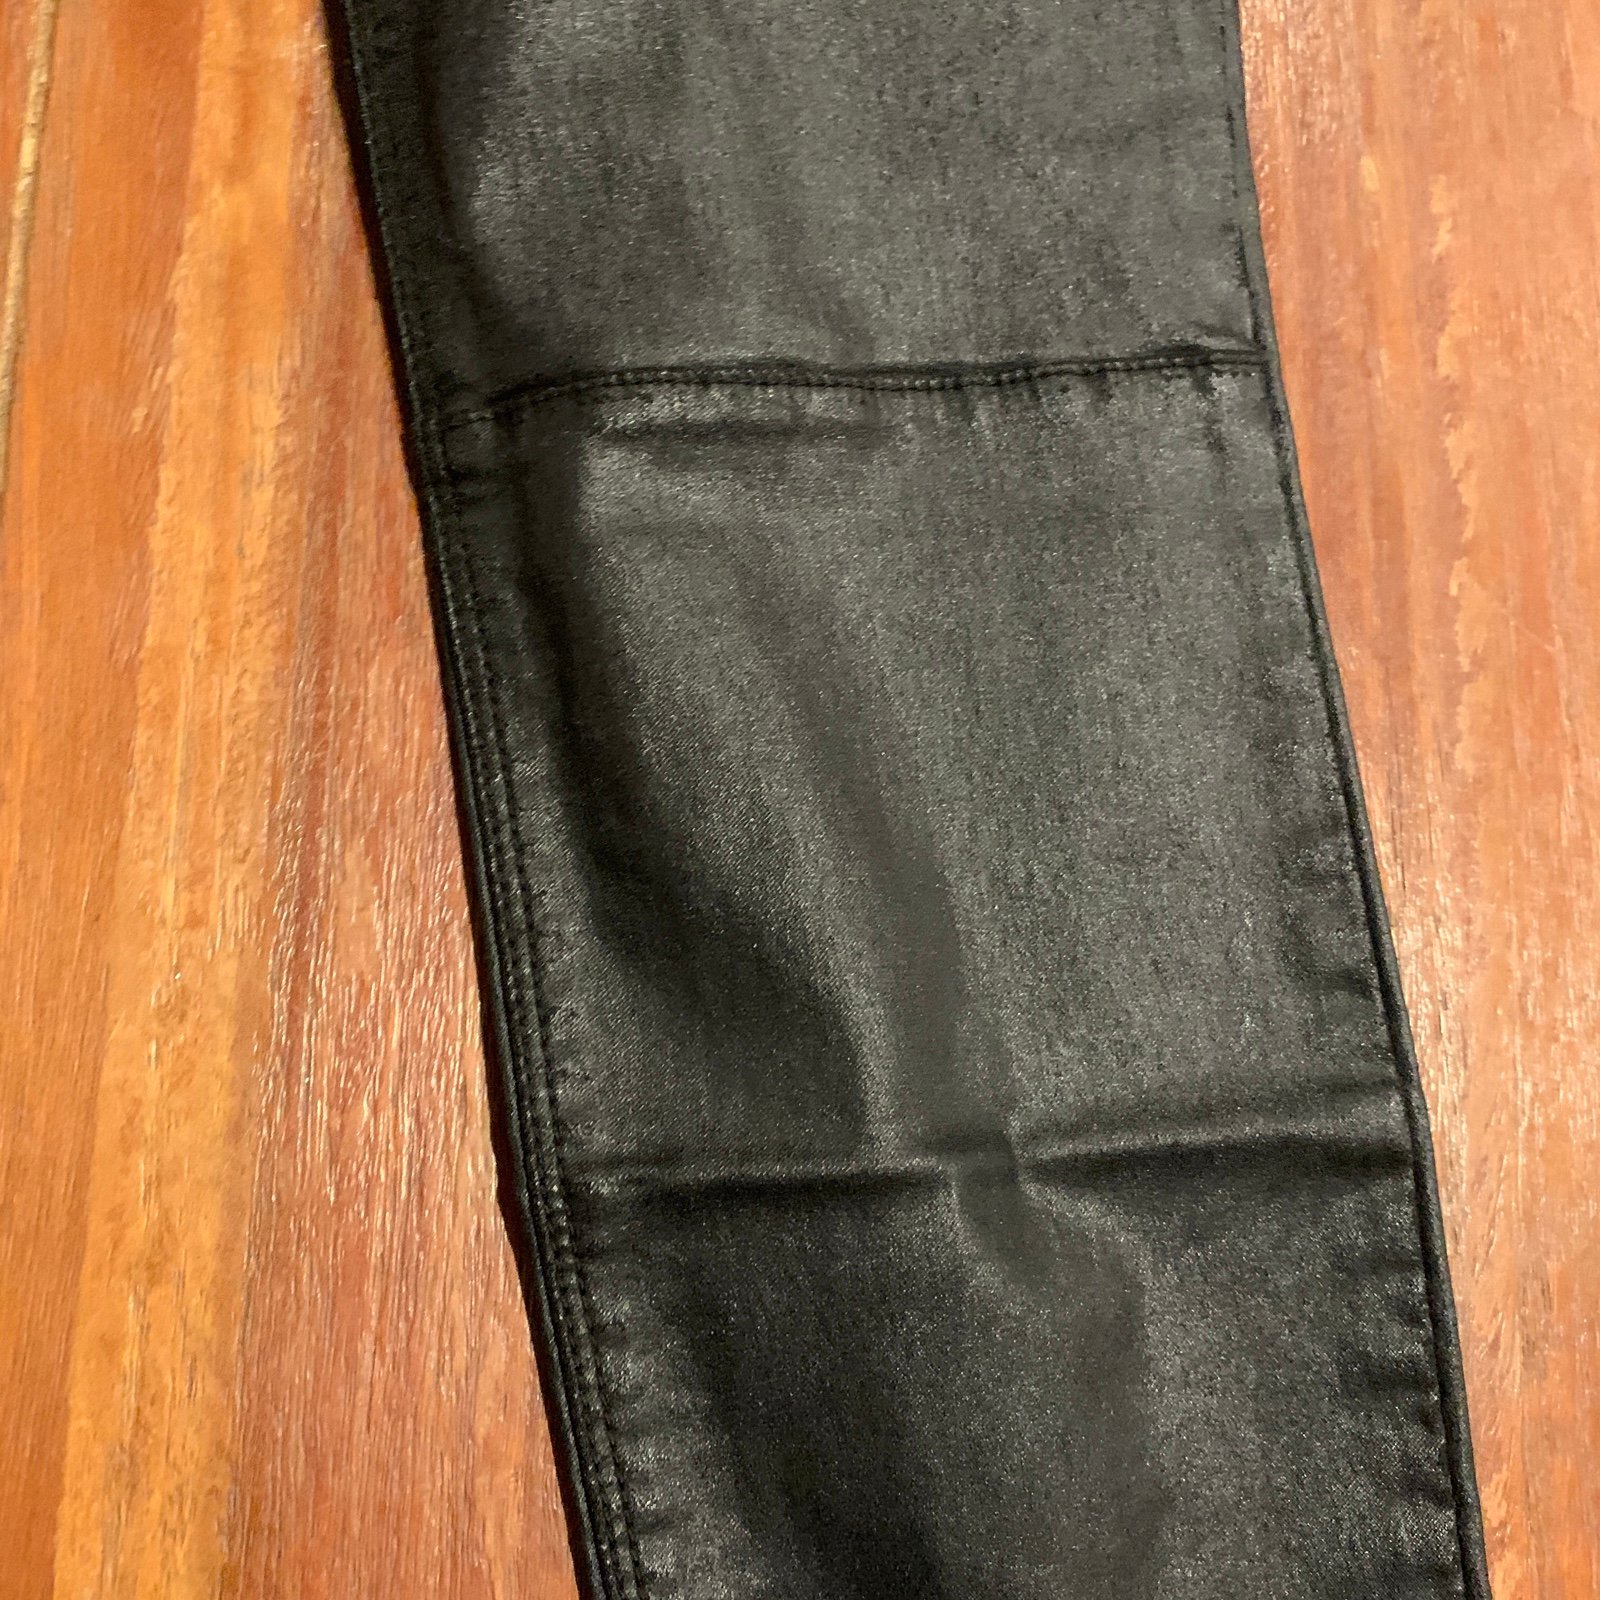 Latest  Miami Women’s Black Faux Leather Skinny Legging Pants High Waist Size Medium HynwTBInH best sale